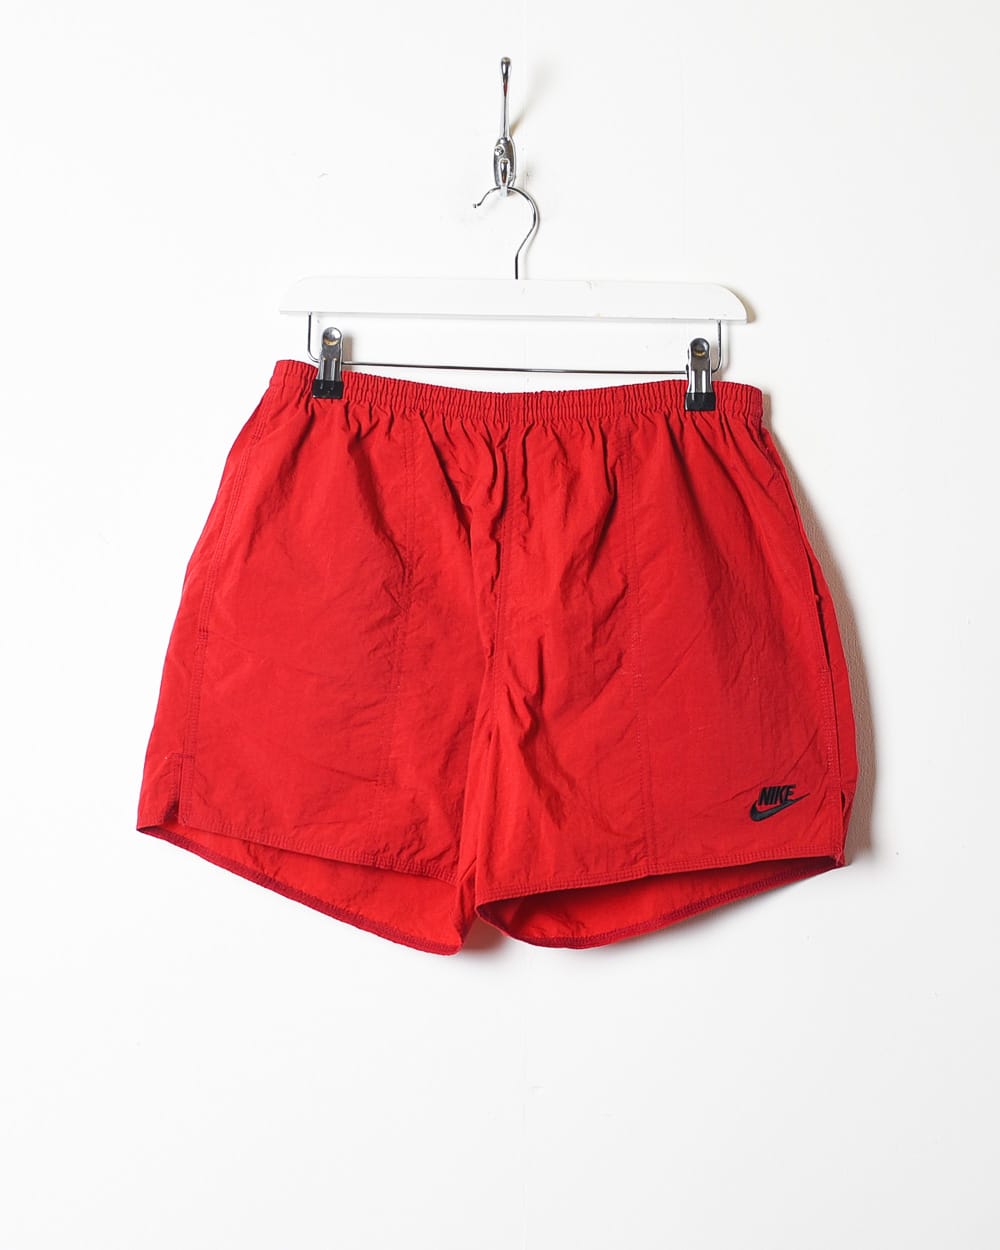 Red Nike Shorts - Medium